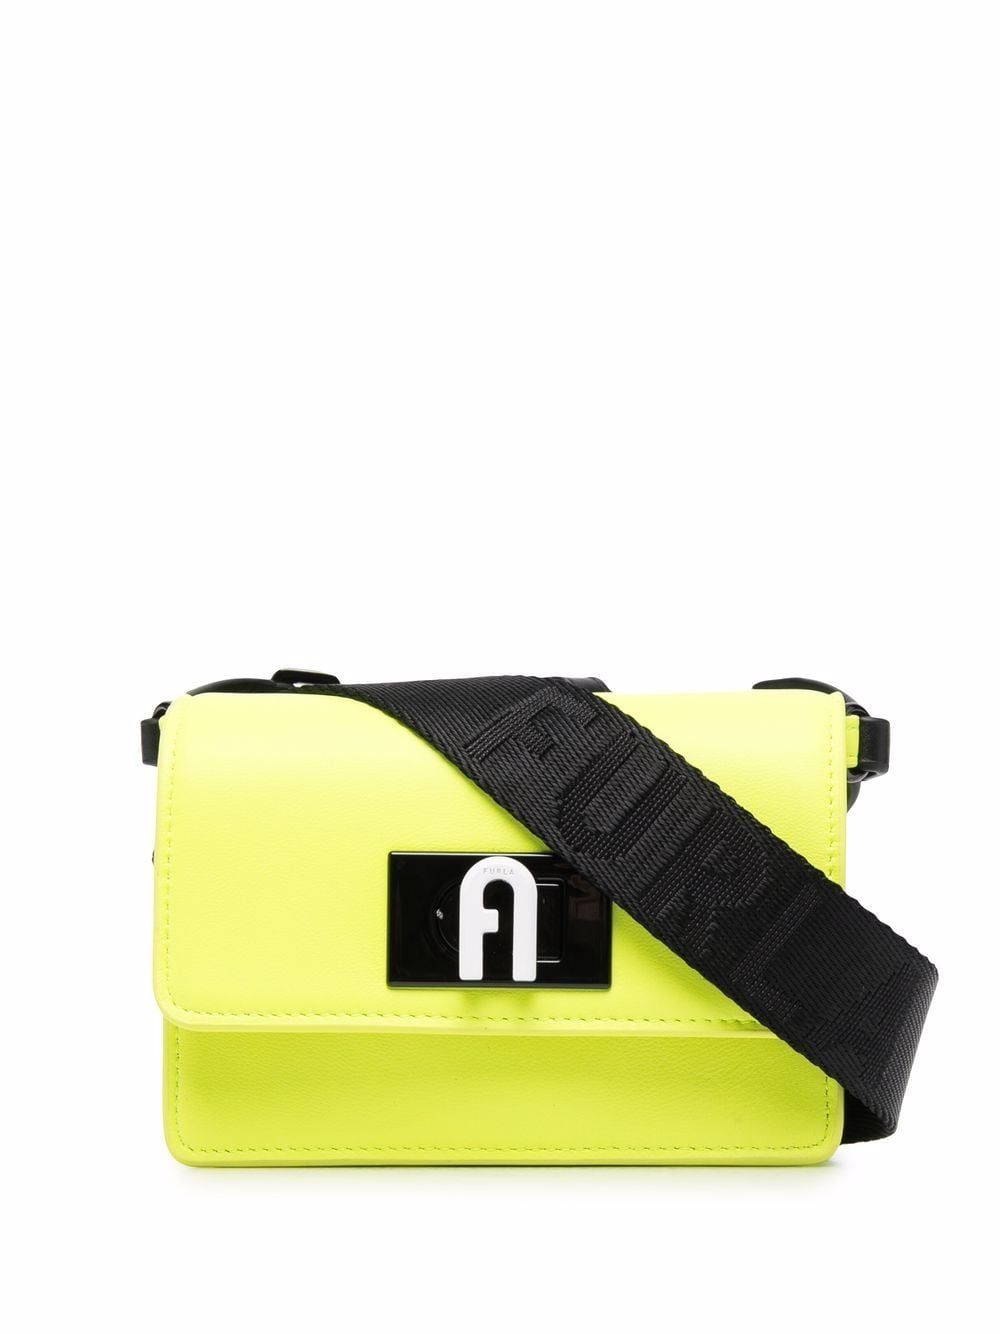 Furla Neon Leather Shoulder Bag In Gelb | ModeSens